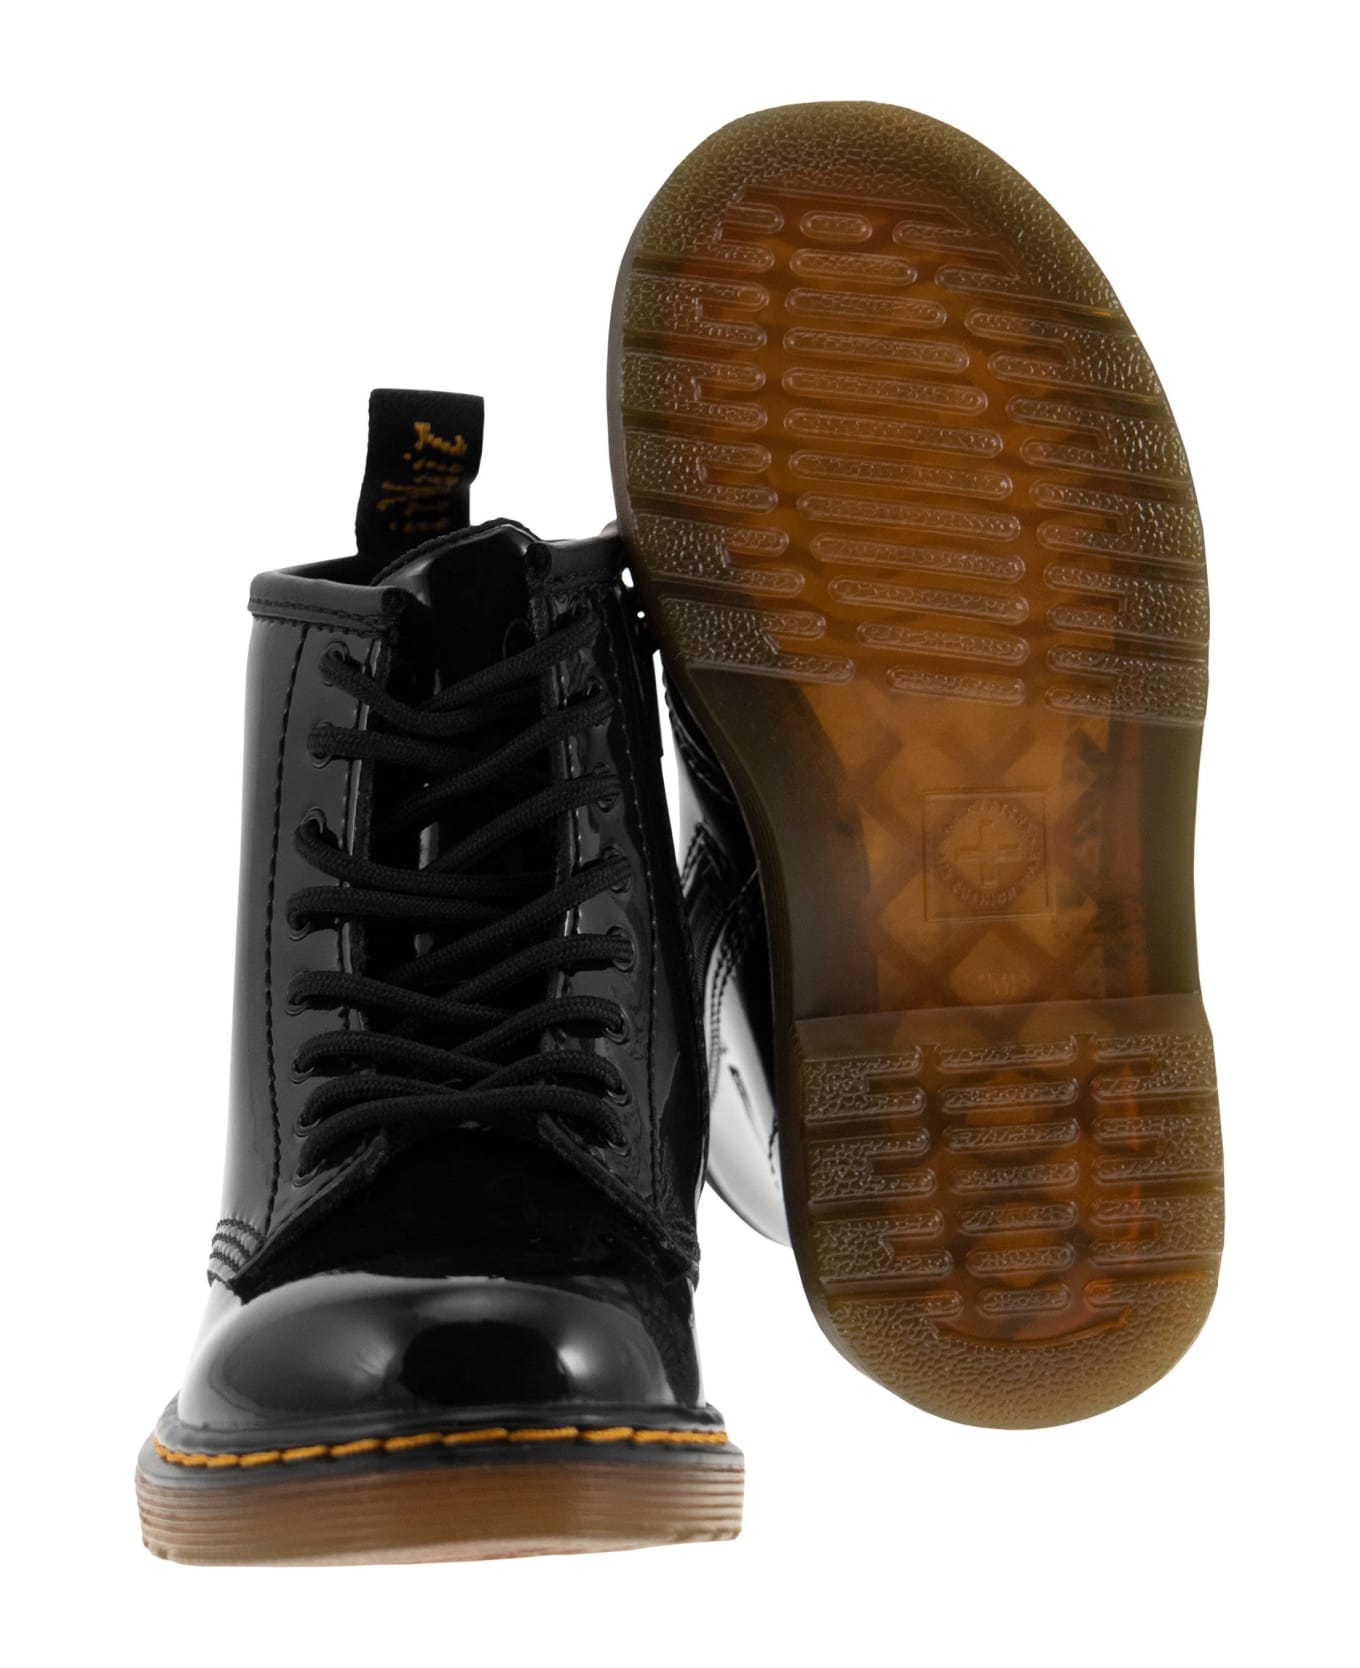 Dr. Martens 1460 - Patent Leather Lace-up Boots - Black シューズ